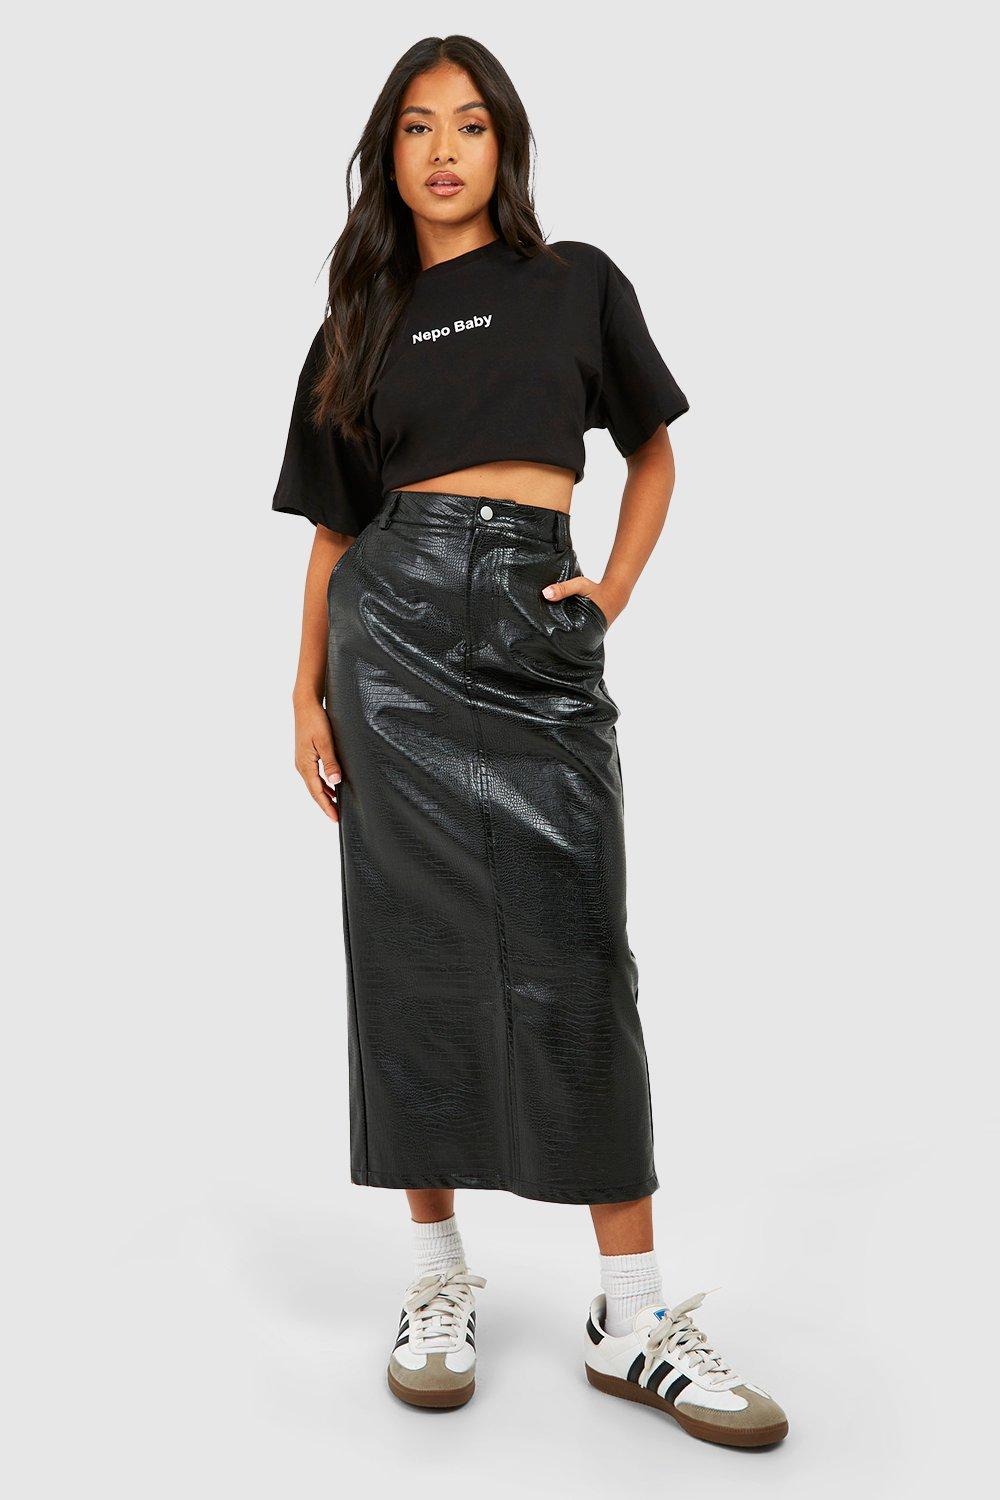 womens petite croc faux leather split midaxi skirt - black - 6, black